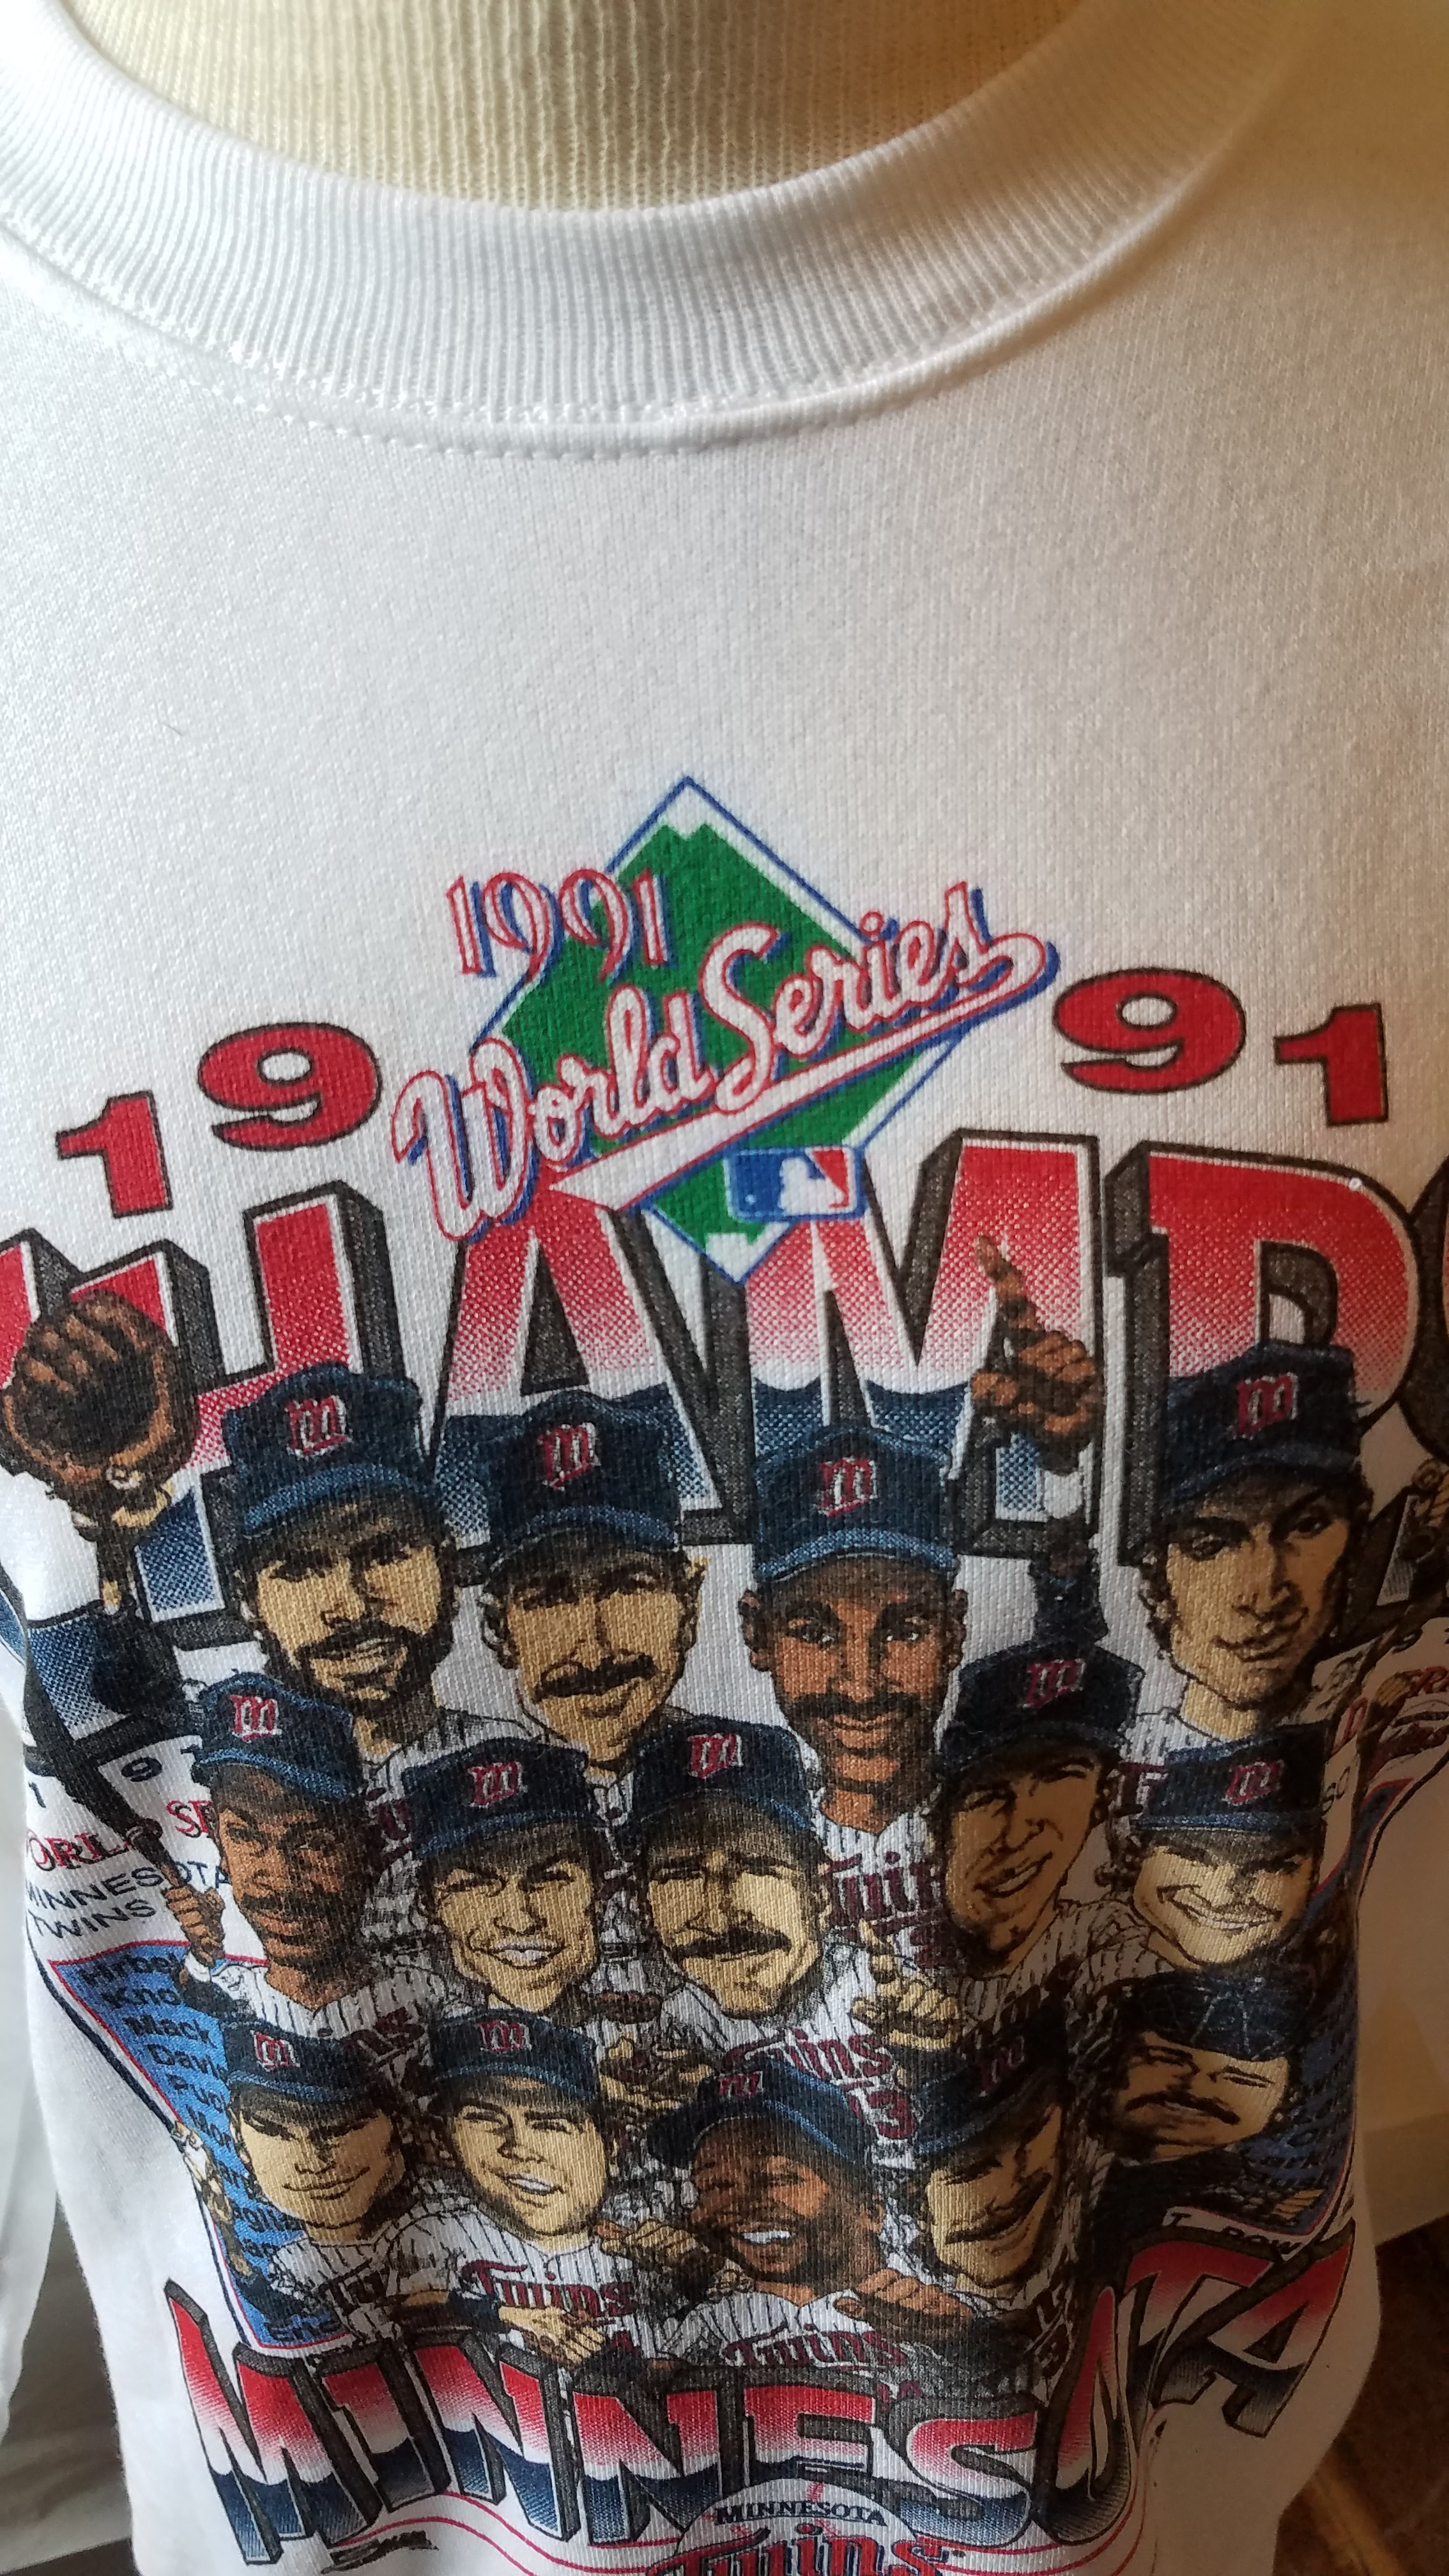 NOS Crew Cut Vintage Twins Sweatshirt 1991